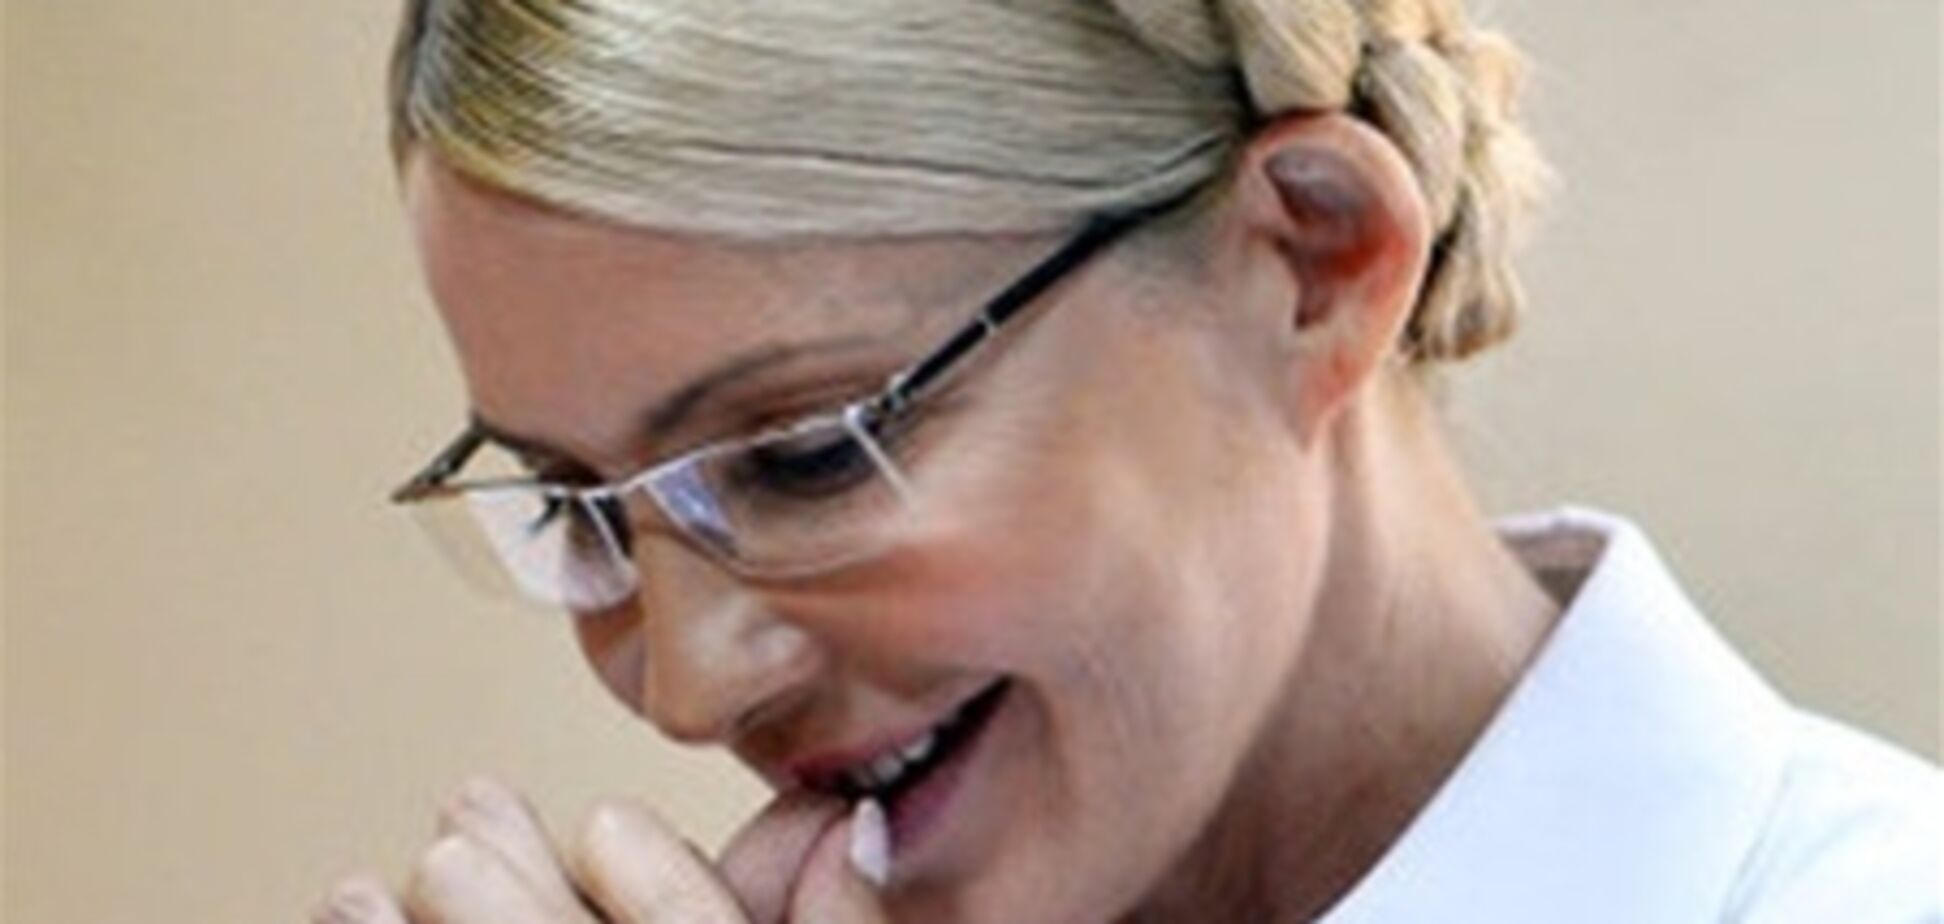 Суд над Тимошенко перенесли на весну